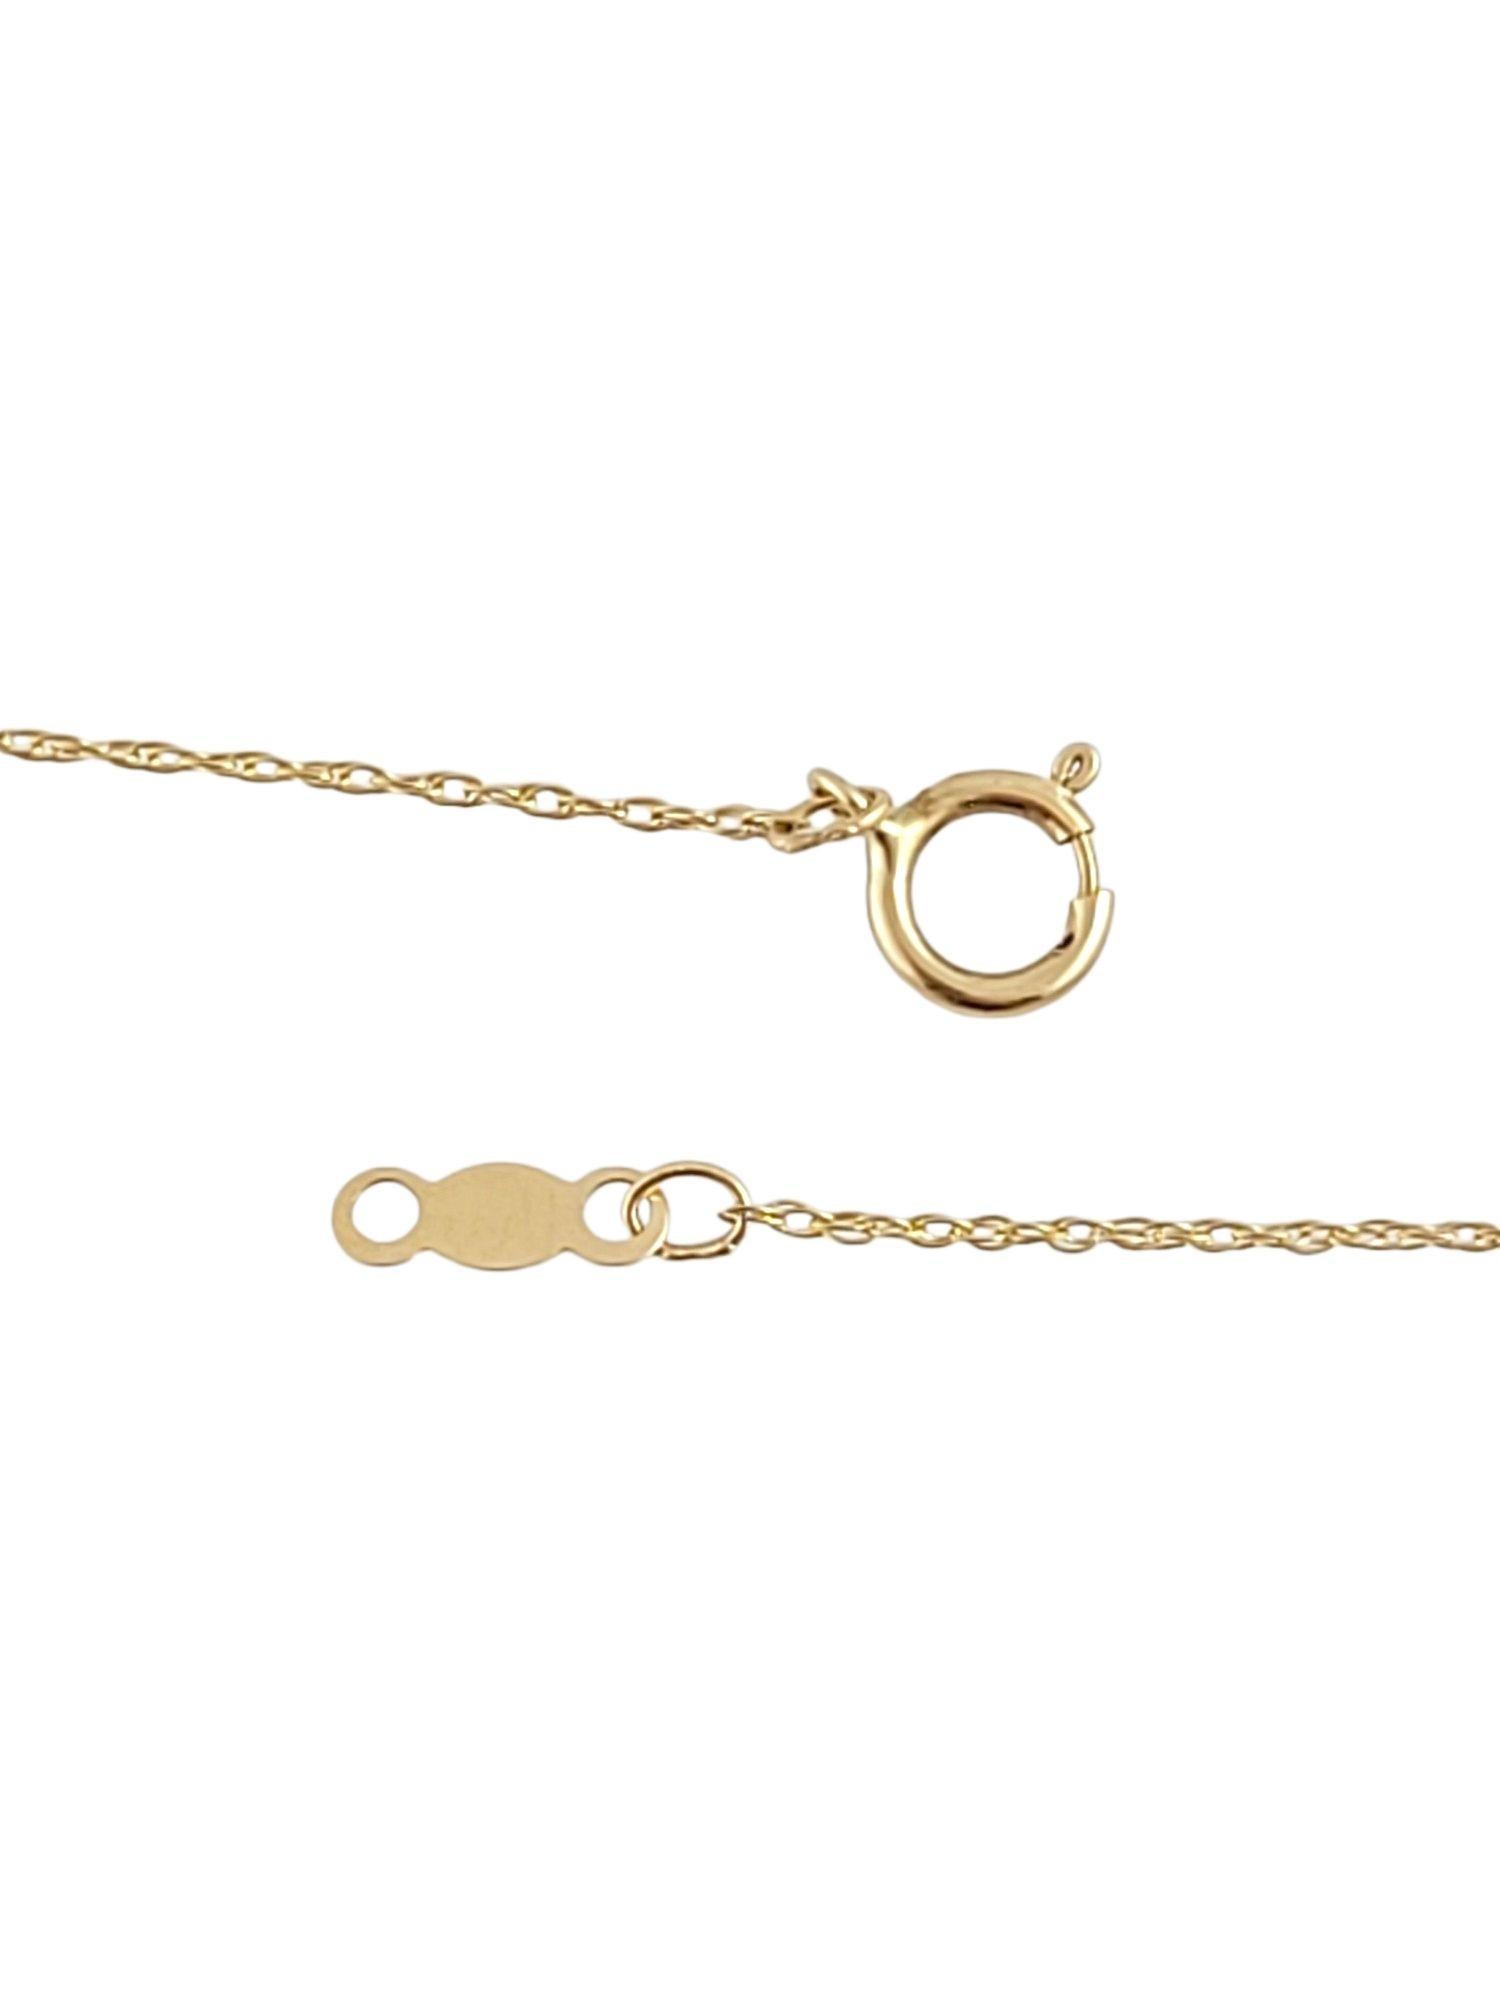 Women's 14K Yellow Gold Diamond Cross Pendant Necklace #14819 For Sale